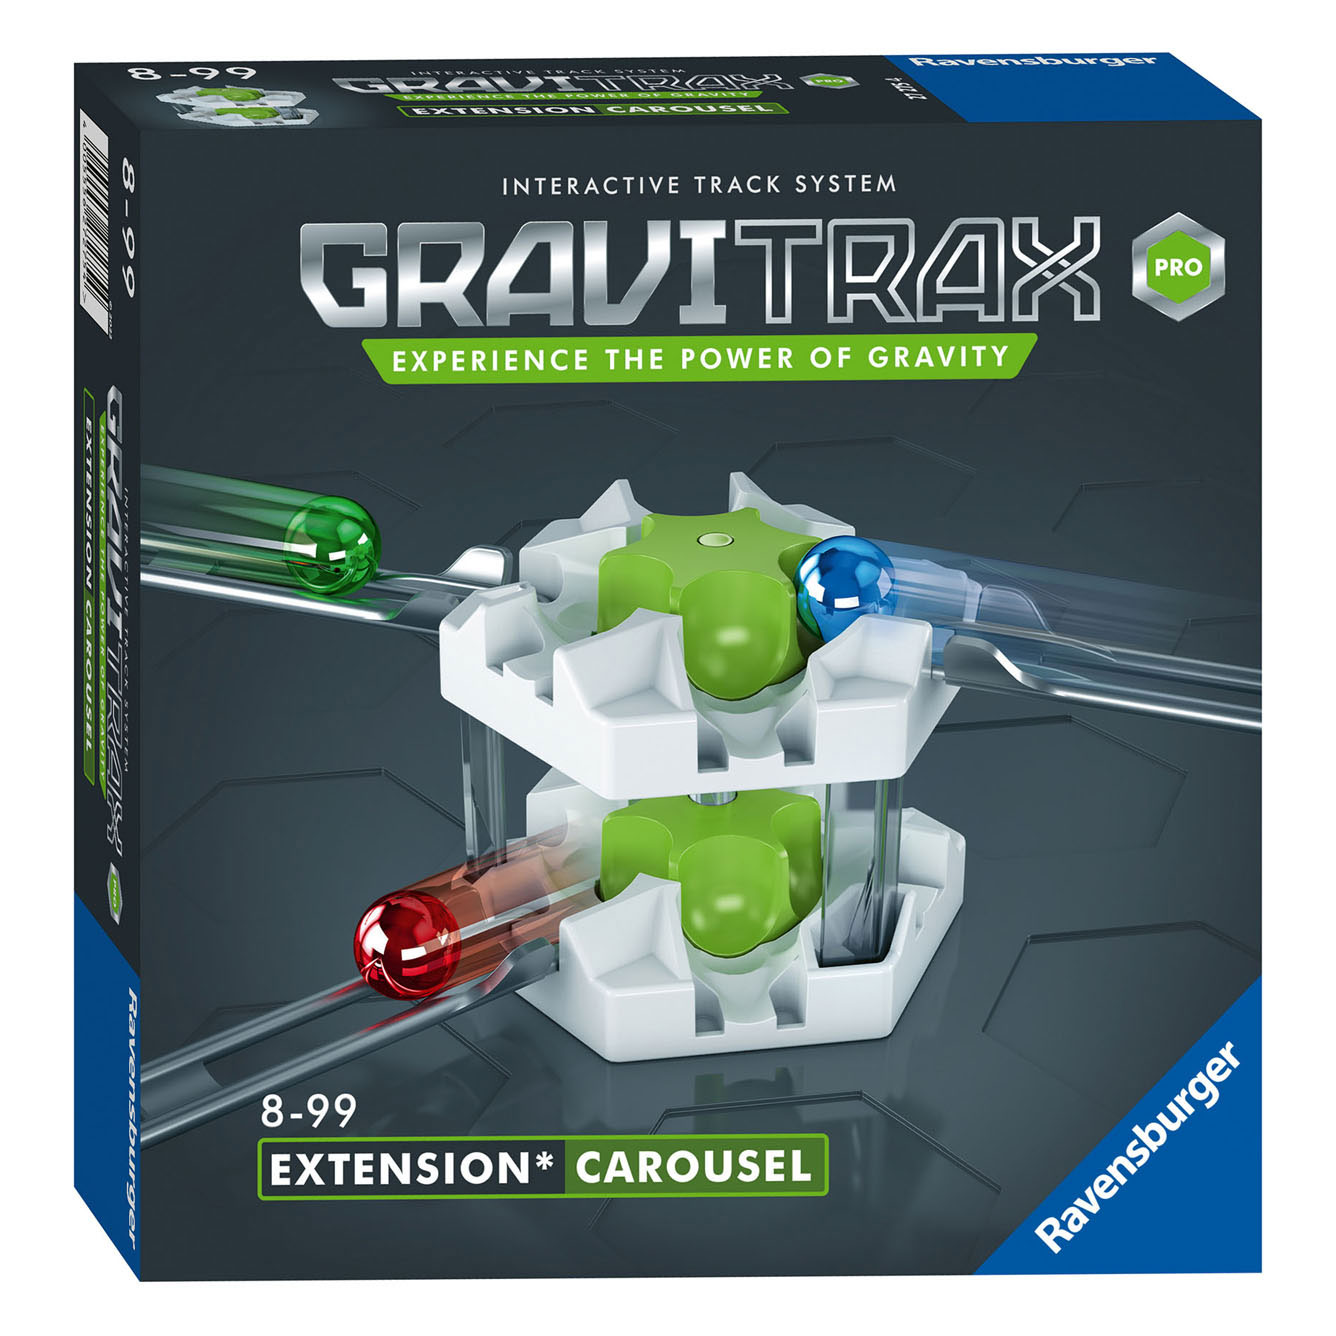 GraviTrax Uitbreidingsset Pro - Vertical Carousel